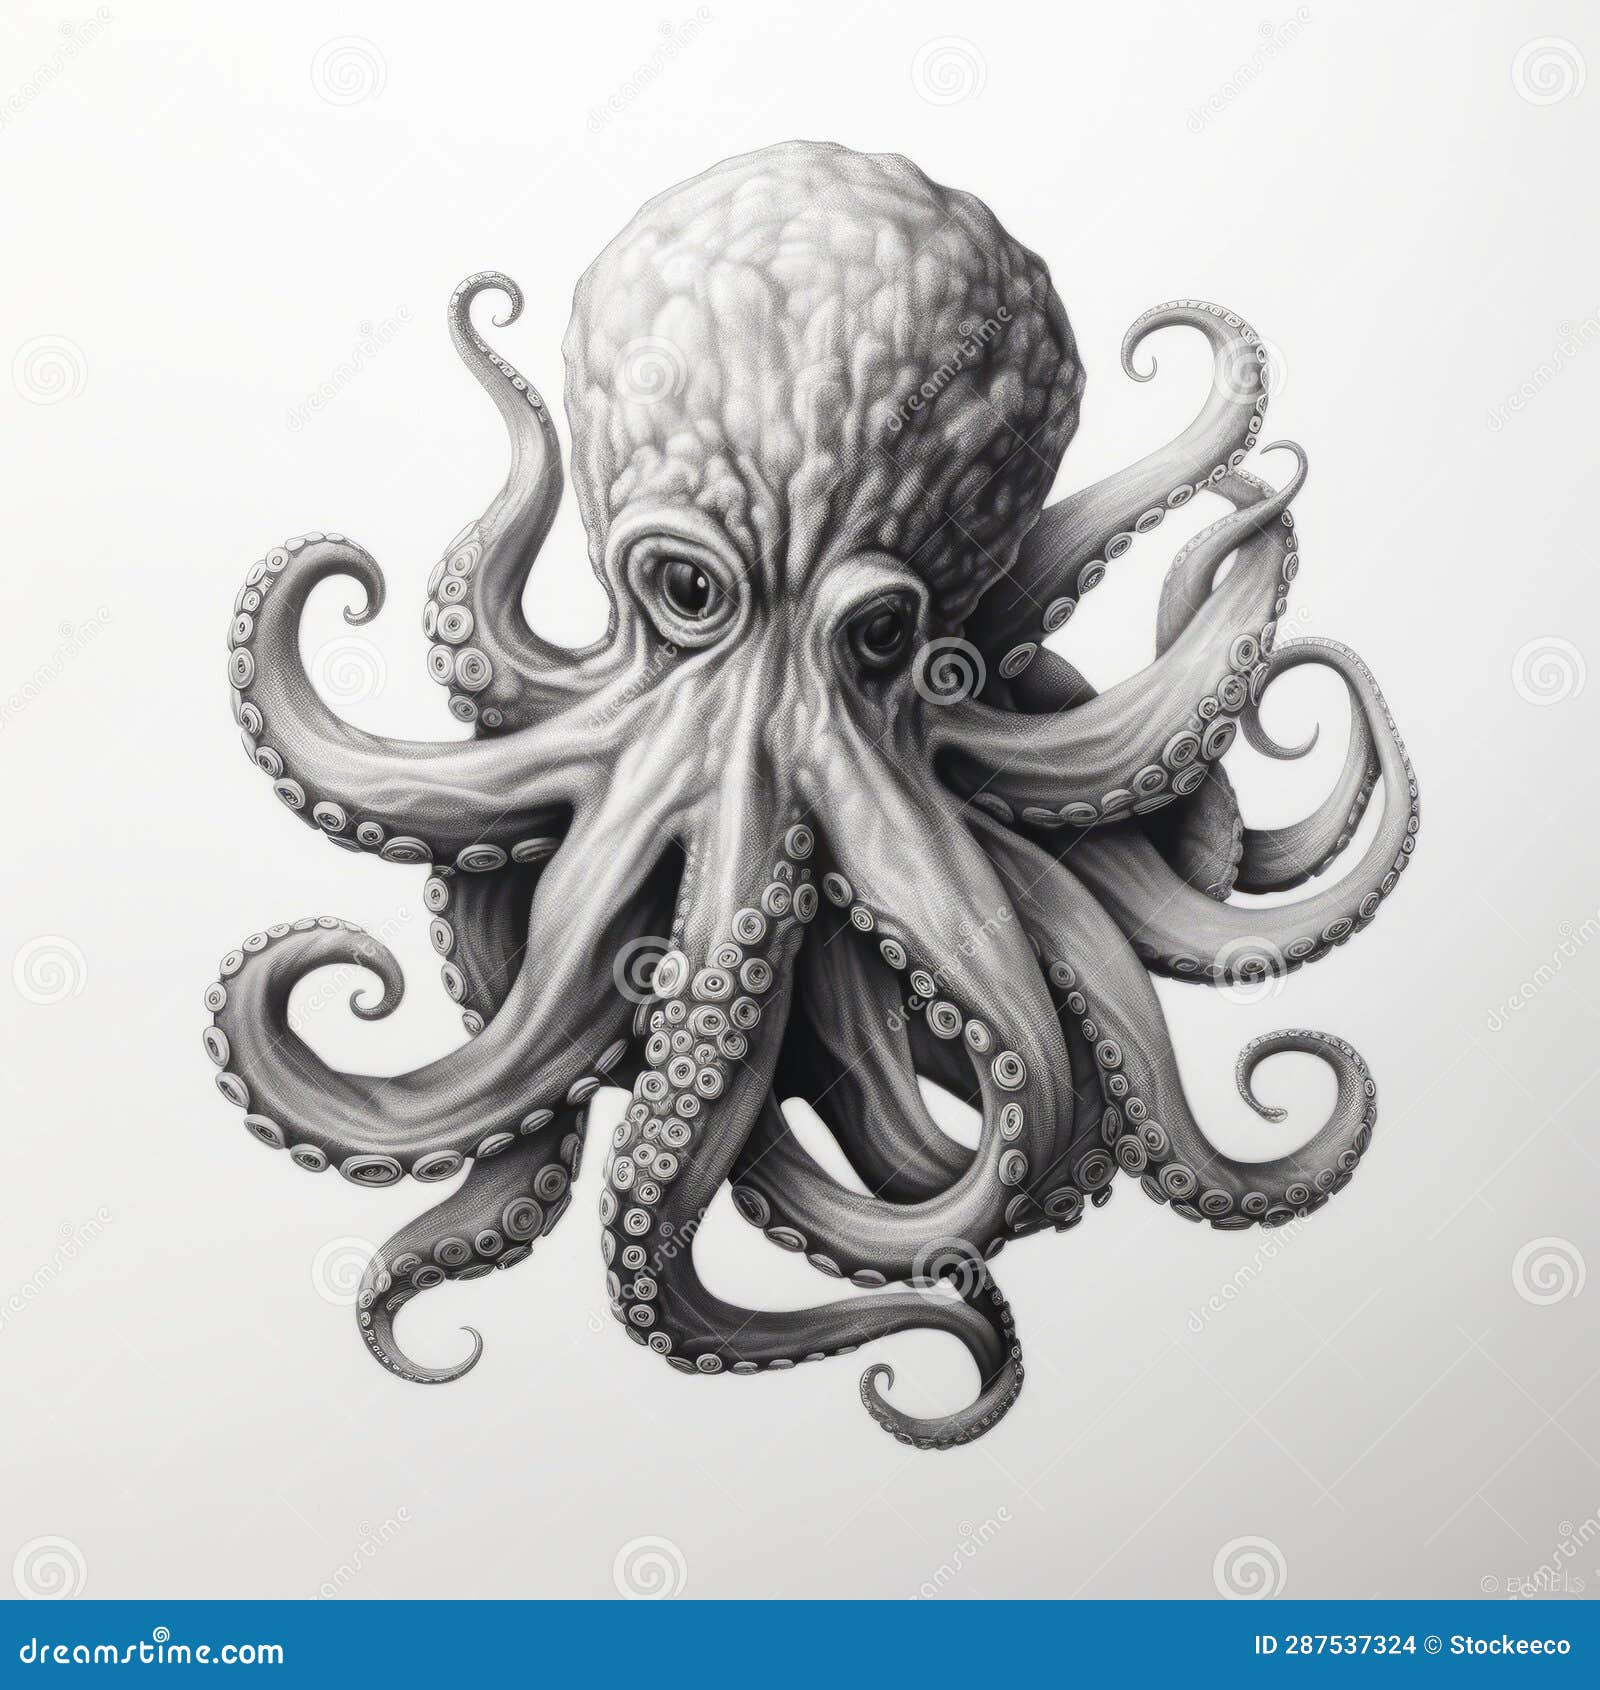 realistic 3d octopus tattoo done at Masterpiece Tattoo